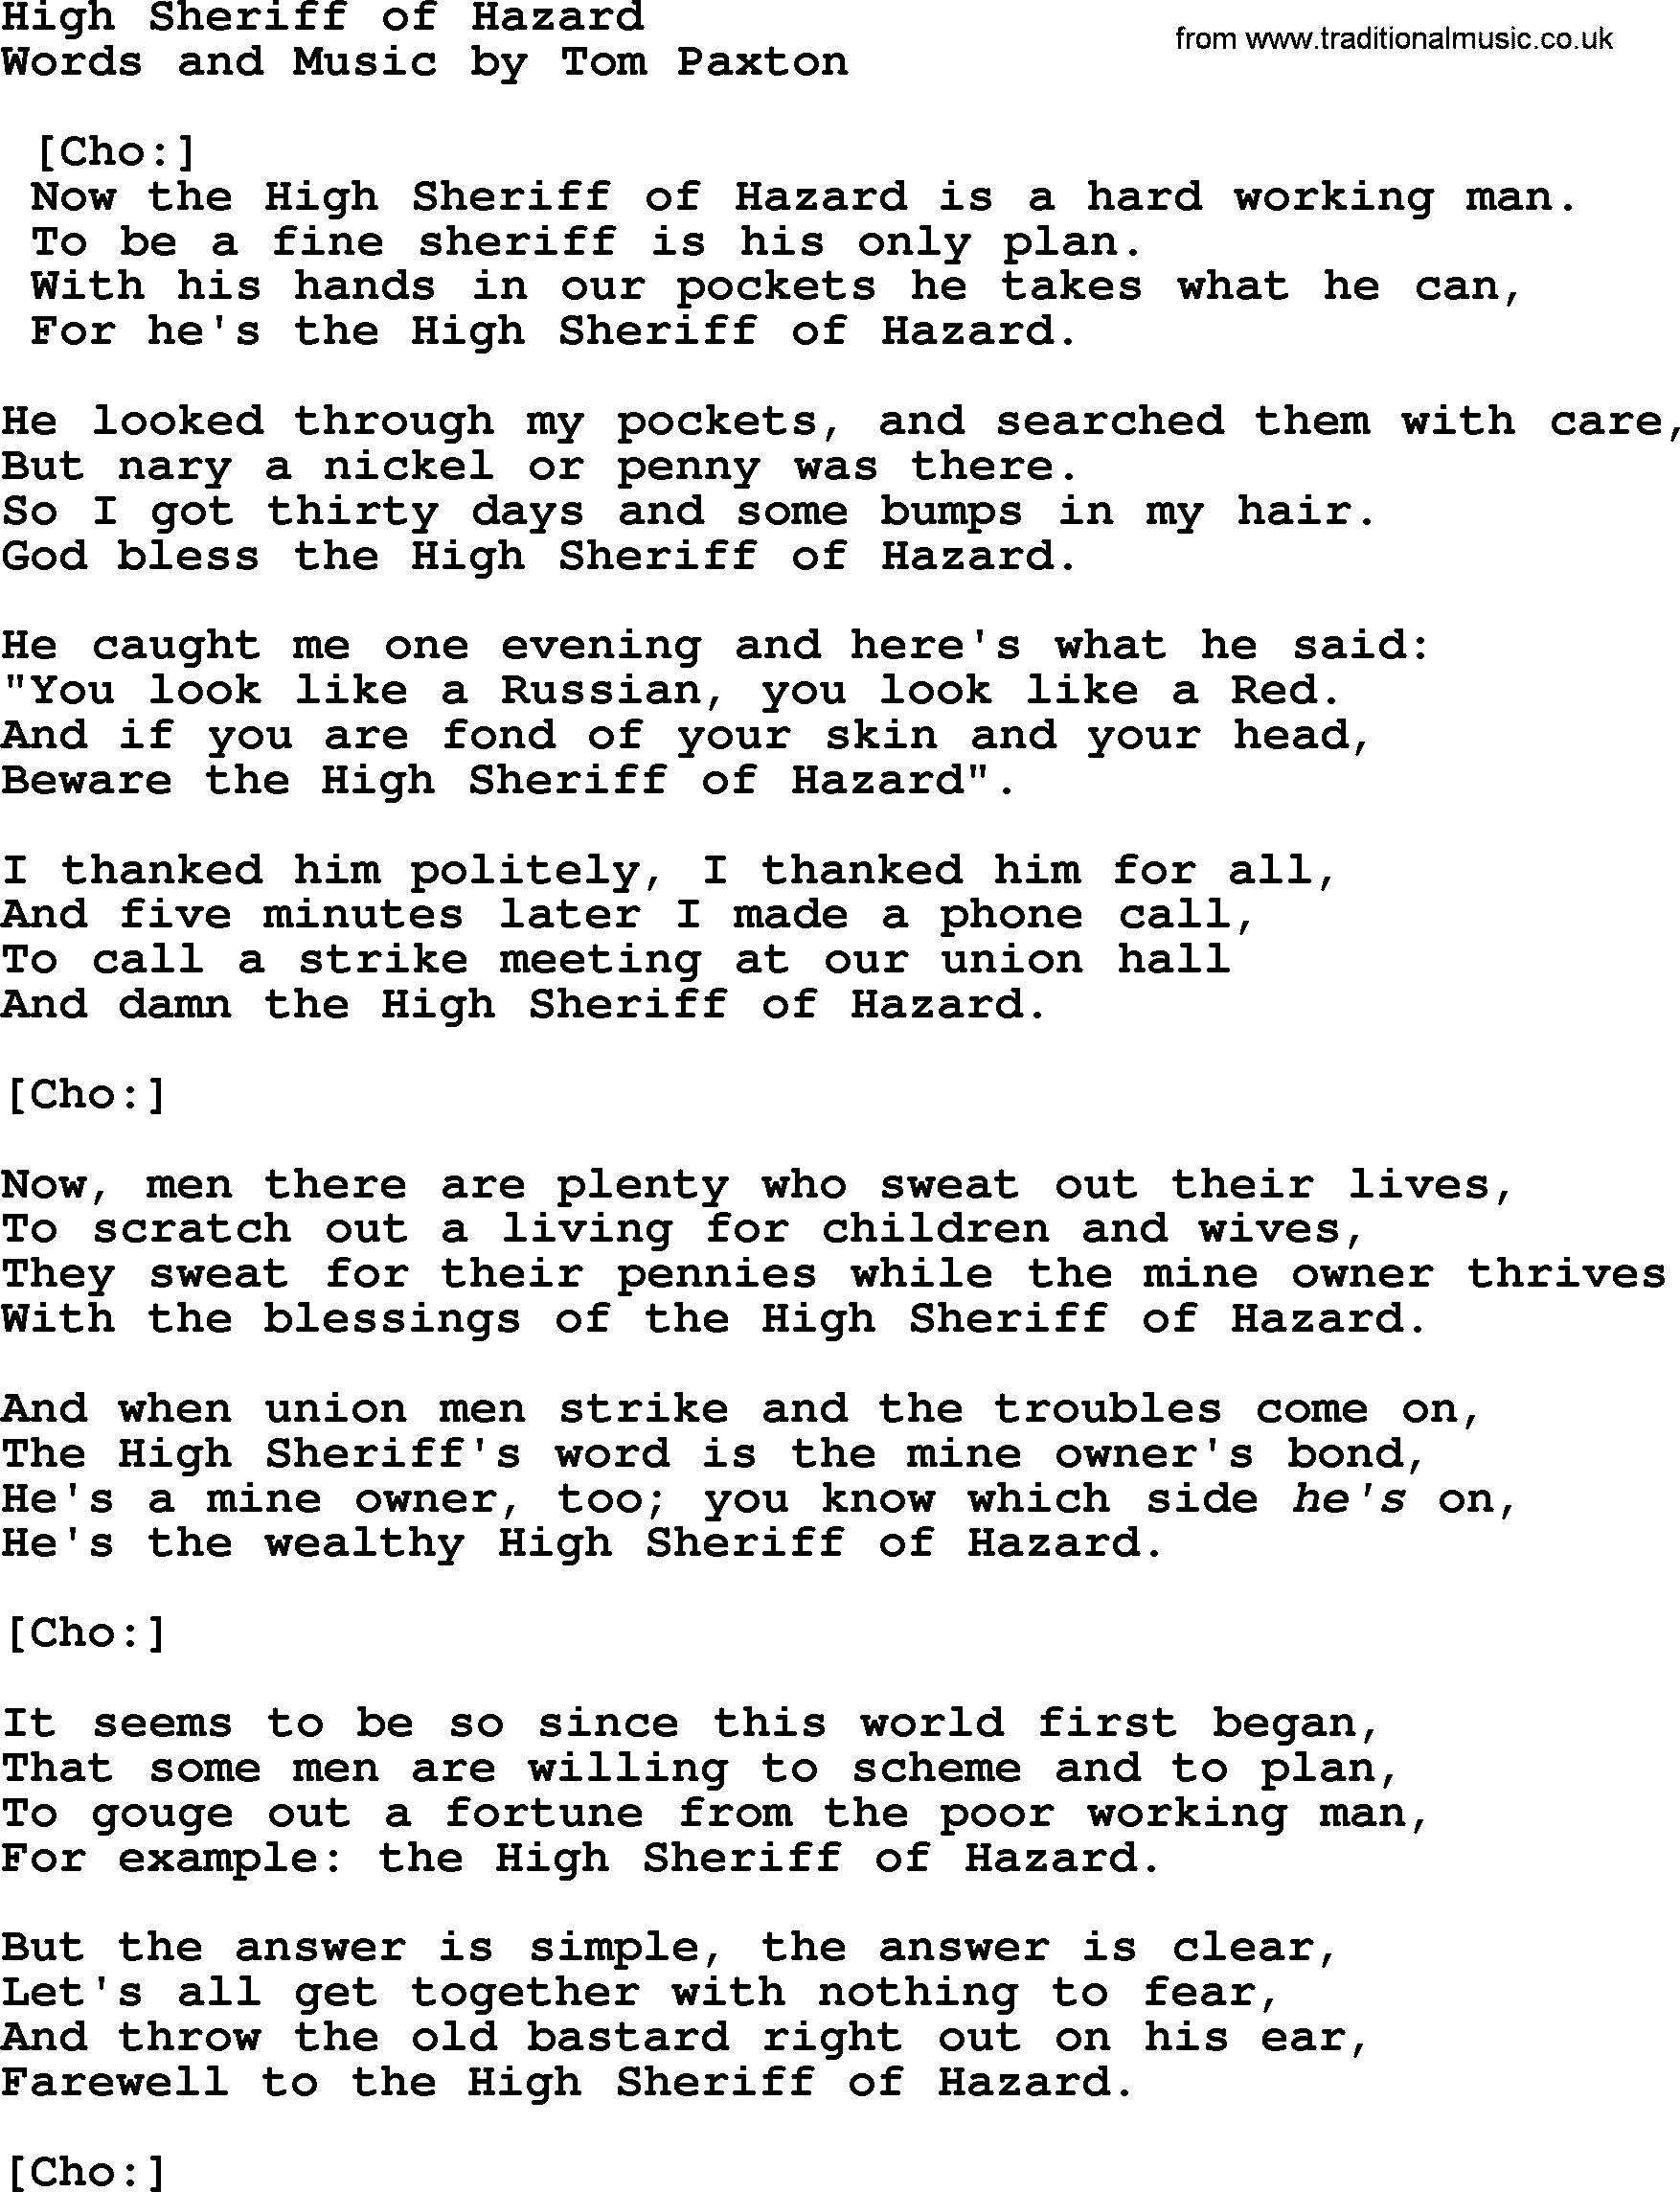 Tom Paxton song: High Sheriff Of Hazard, lyrics